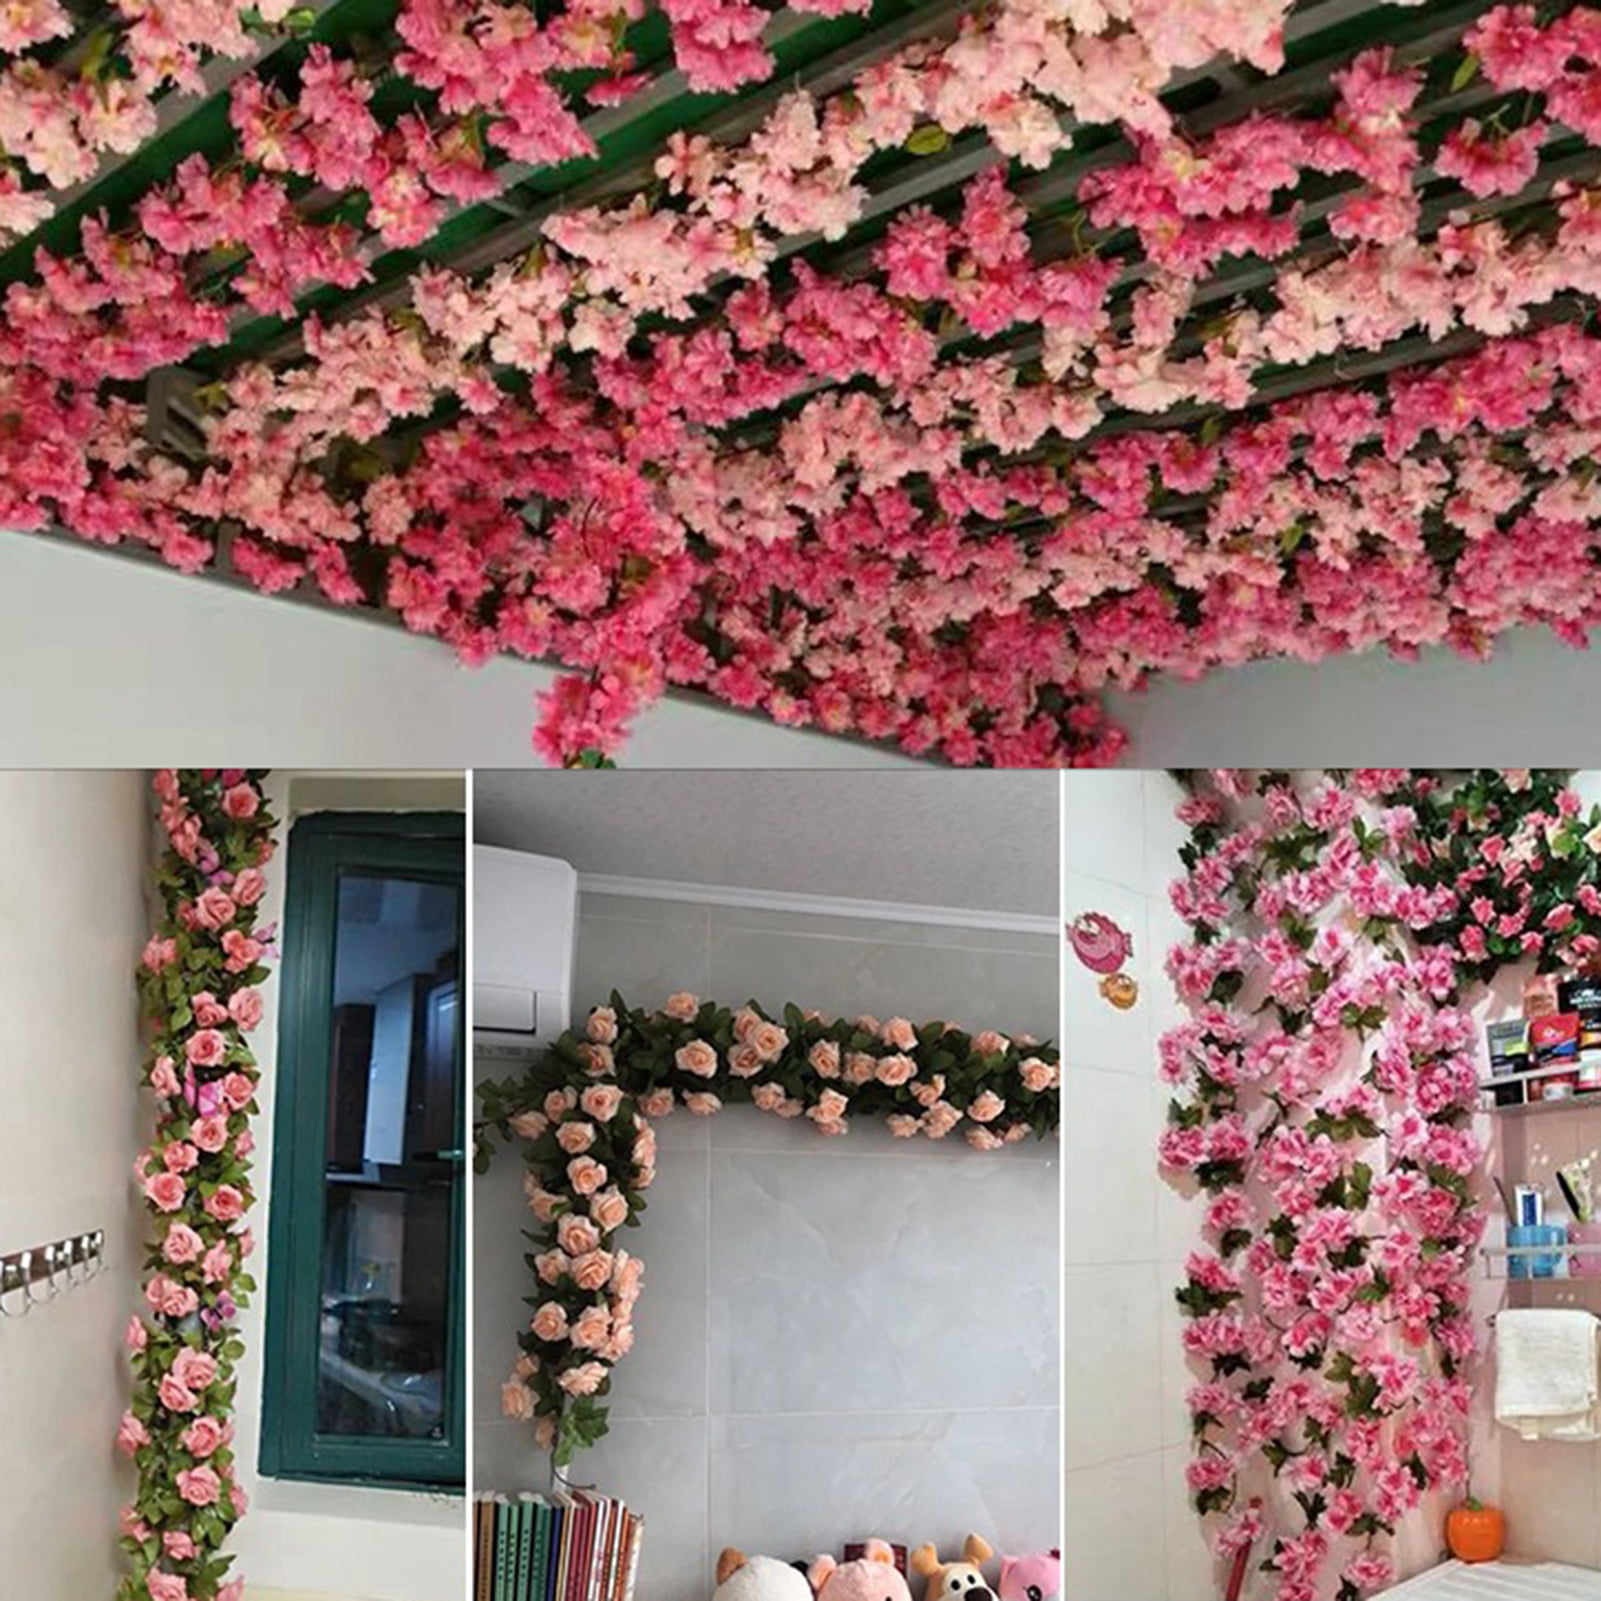 WEISPARK Fake Flowers- 4pcs 8.2 FT Artificial Rose Vine Flower Plants  Hanging Rose Ivy for Home Hotel Office Wedding Party Garden Craft Art Décor